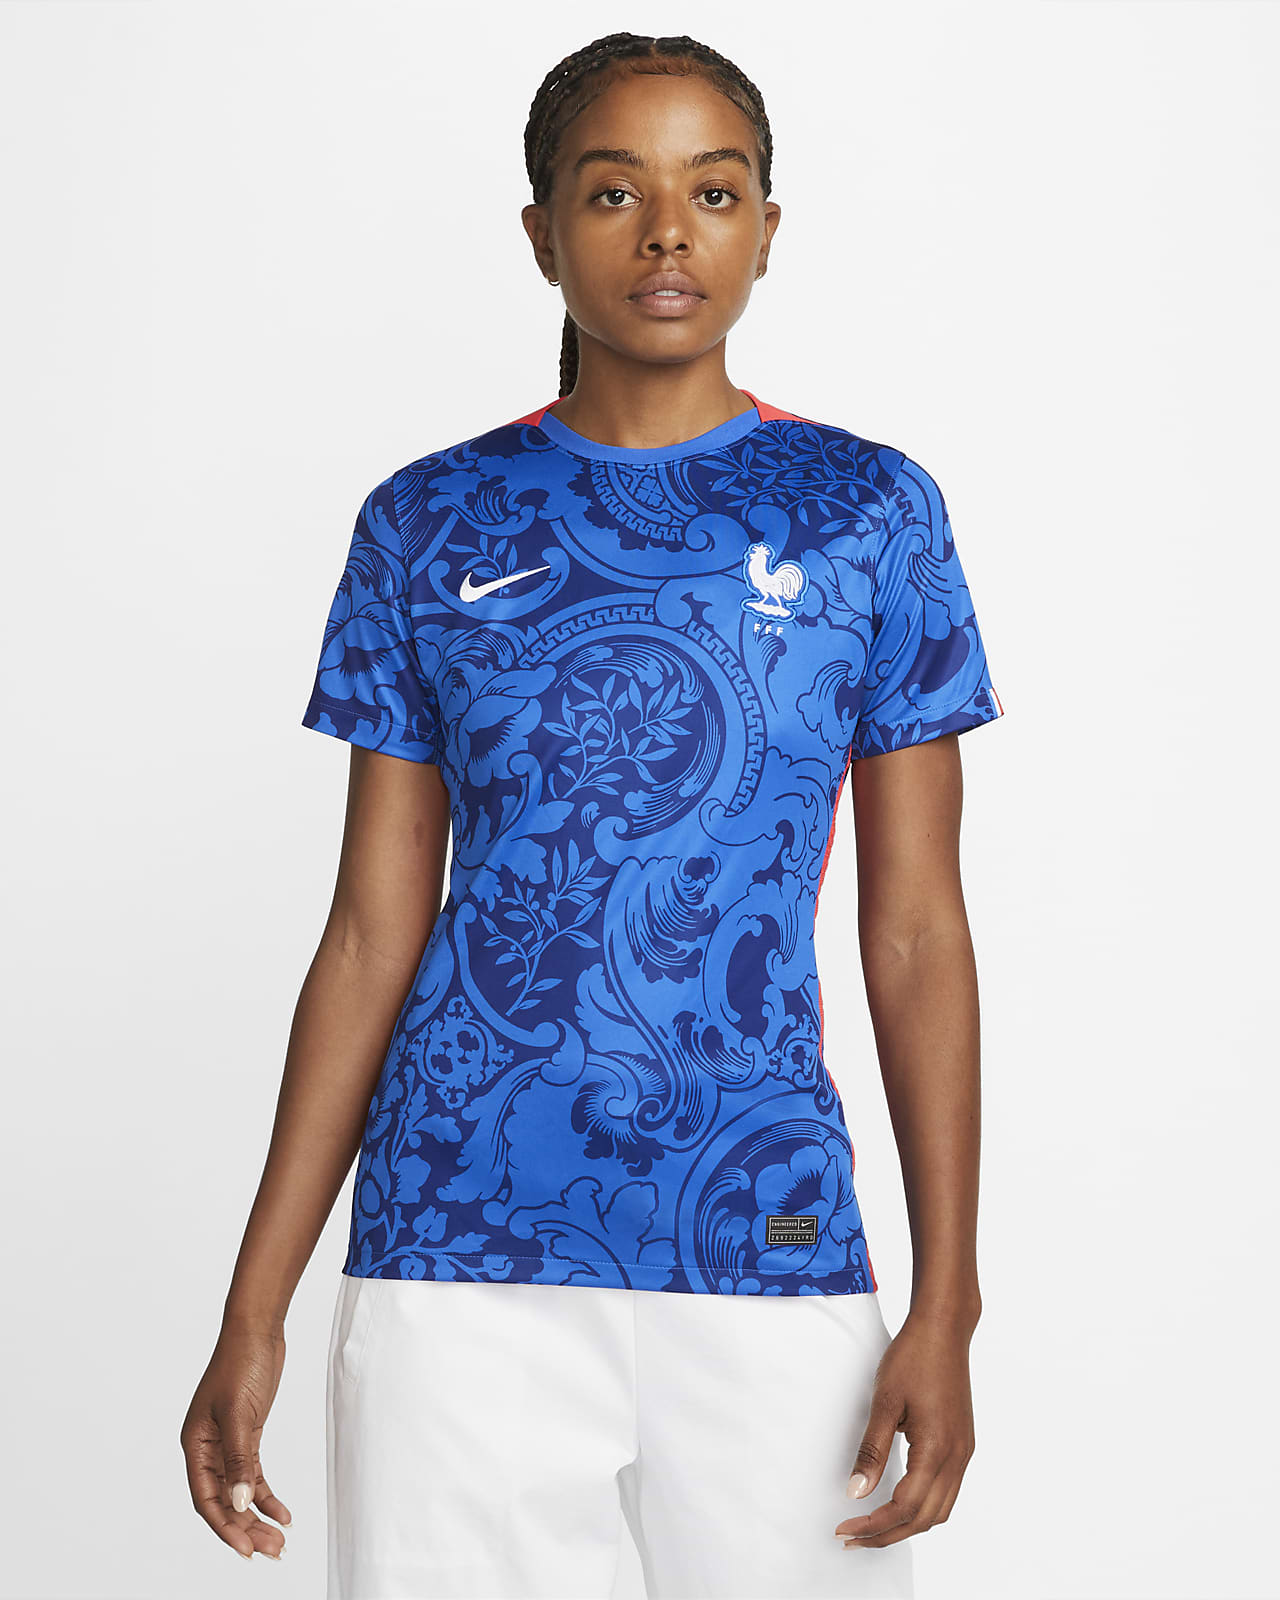 FFF 2022 Stadium Home Women's Nike Dri-FIT Football Shirt